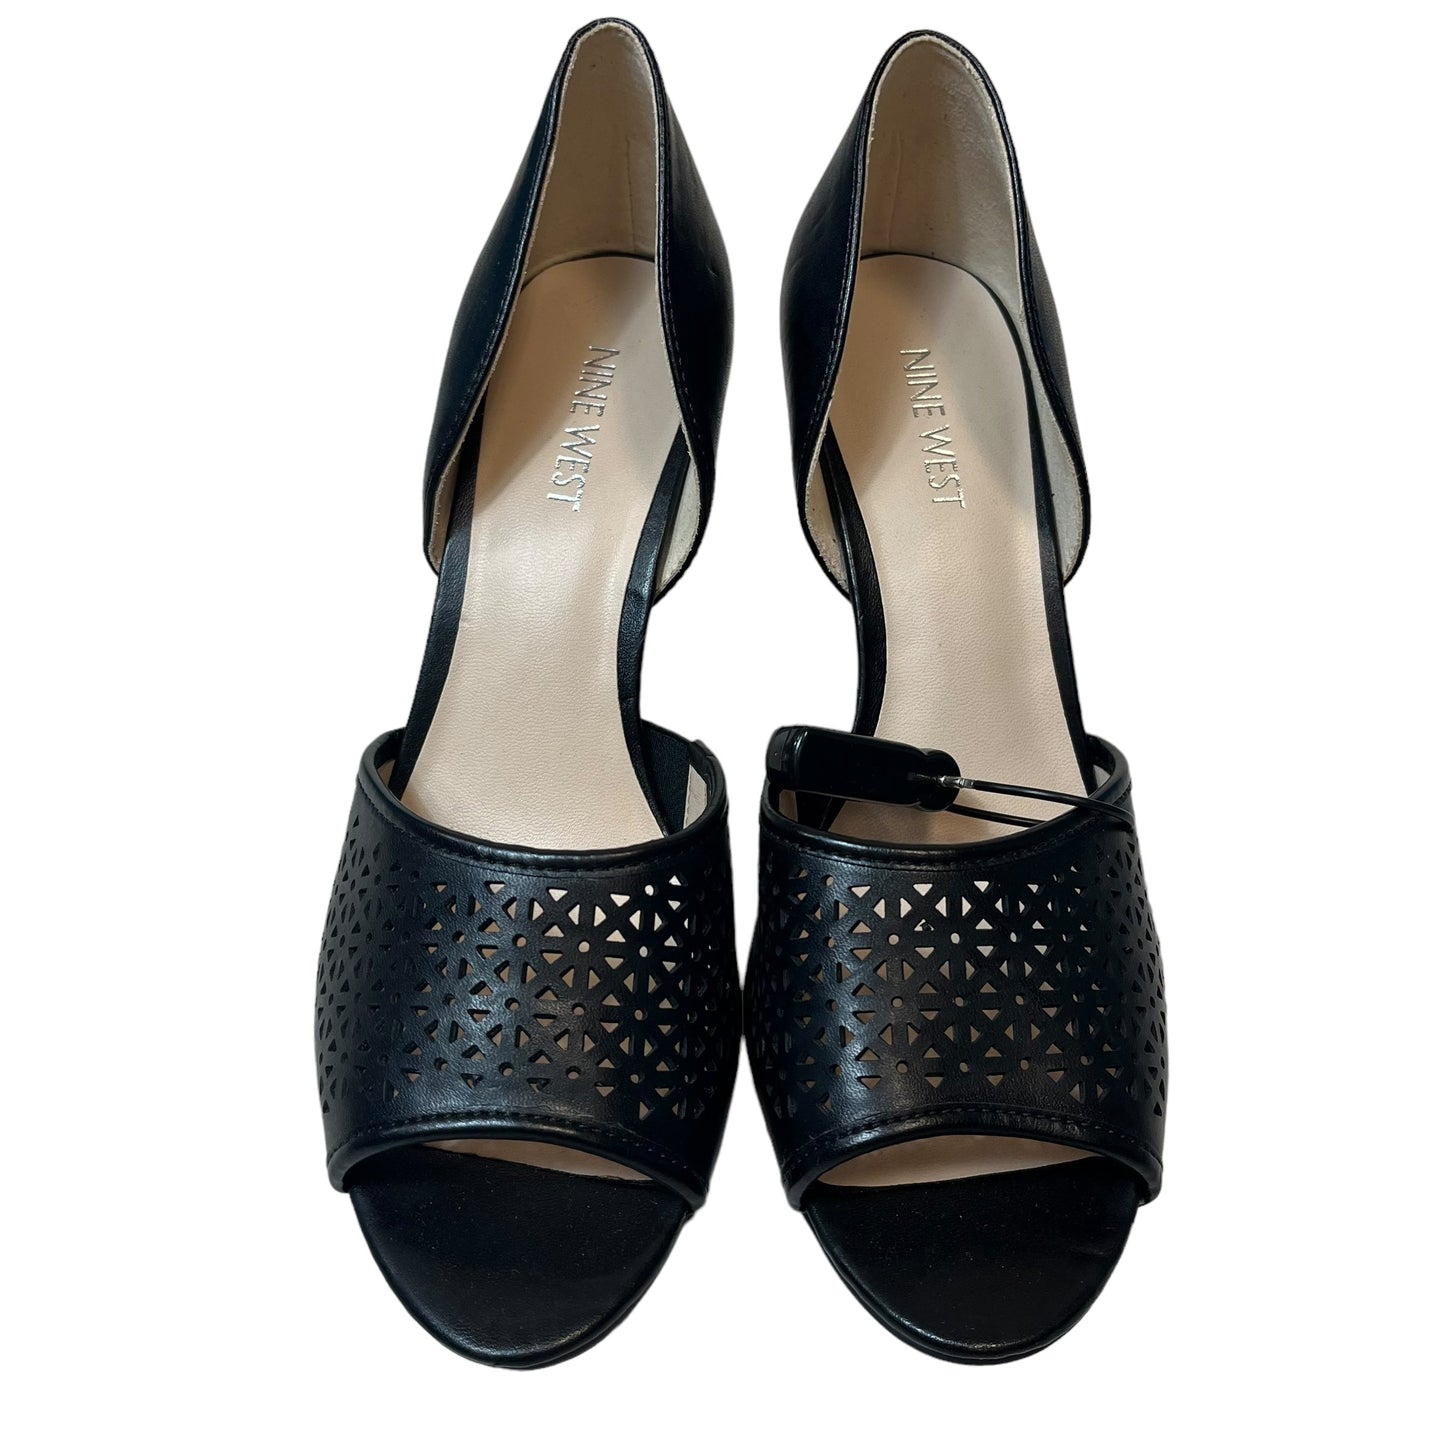 Black Shoes Heels Stiletto Nine West, Size 8.5